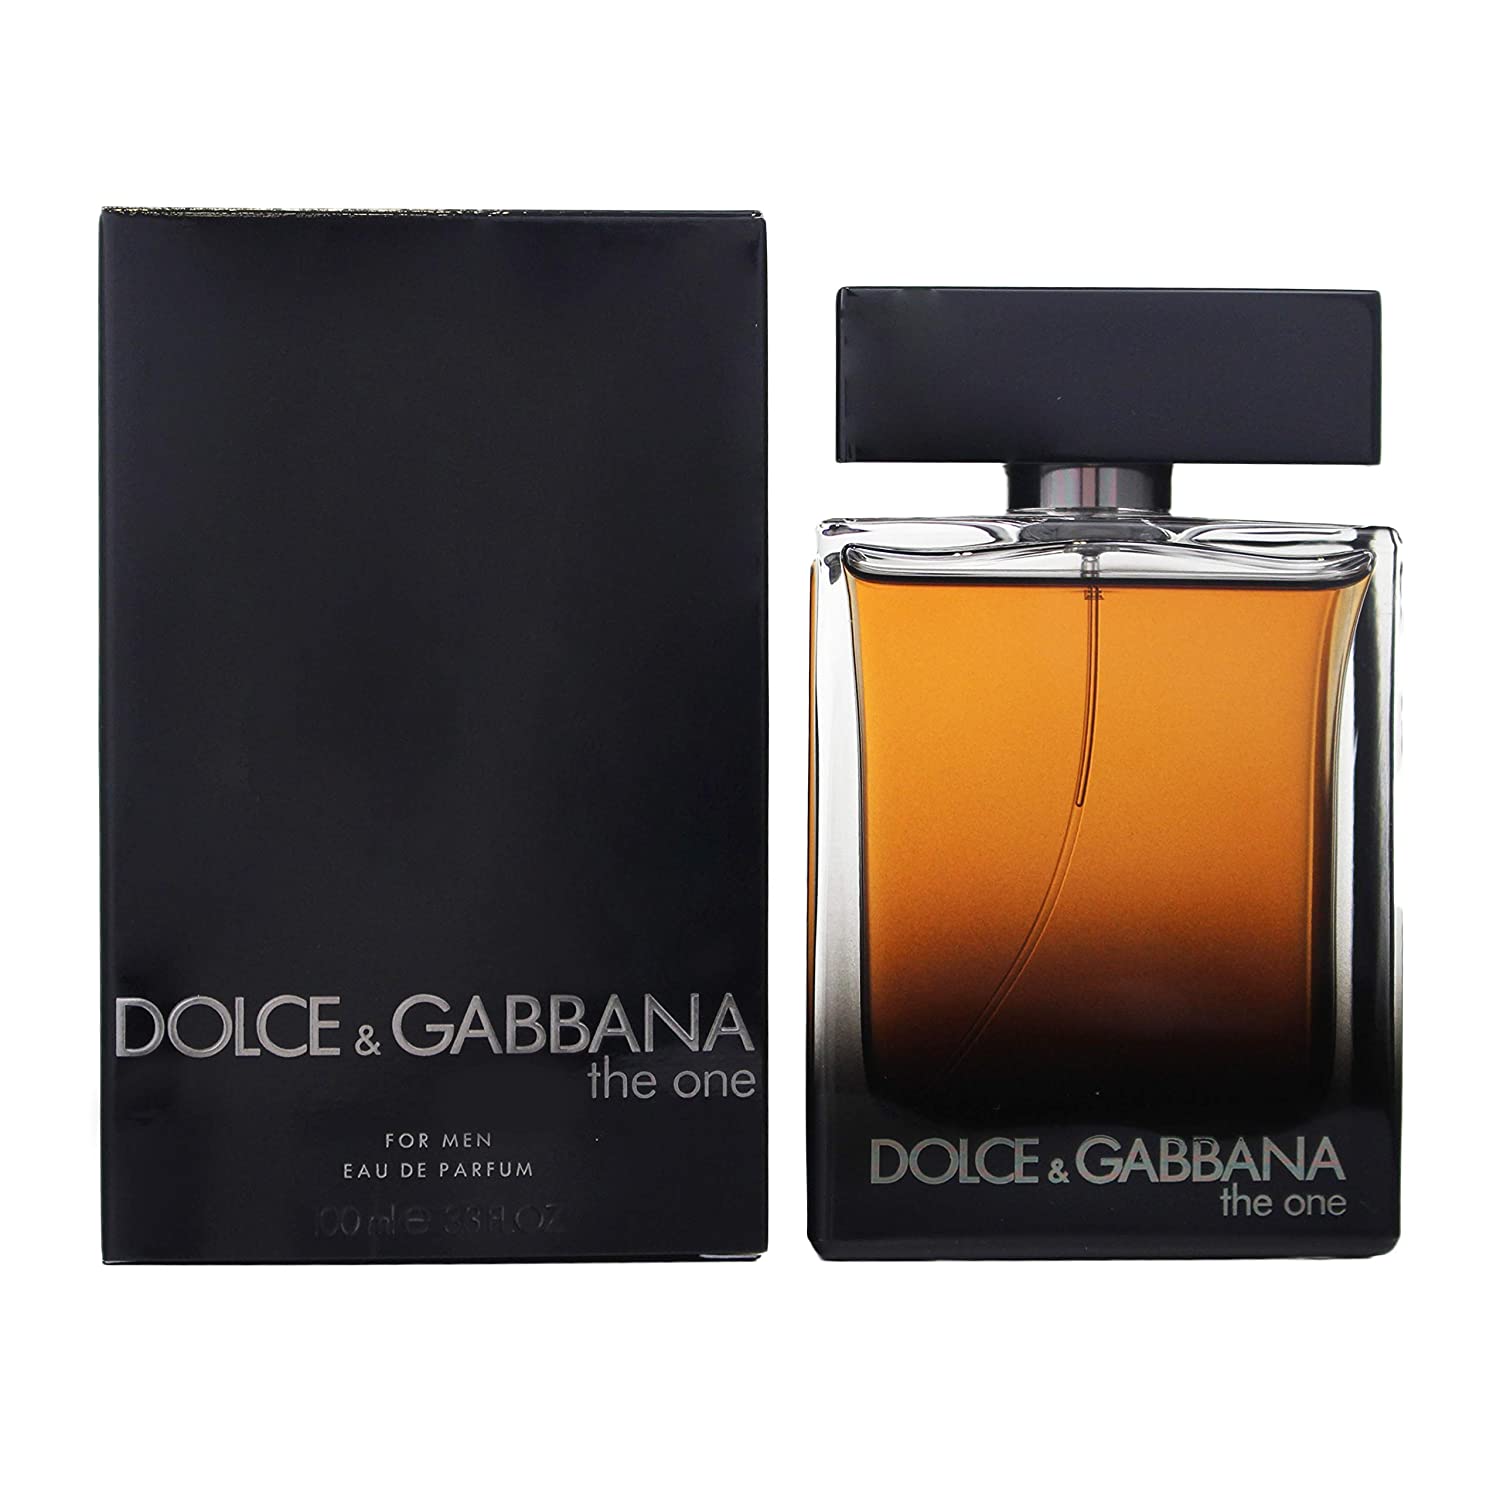 Dolce & Gabbana The One For Men - Eau de Parfum, 100 ml - Buy original ...